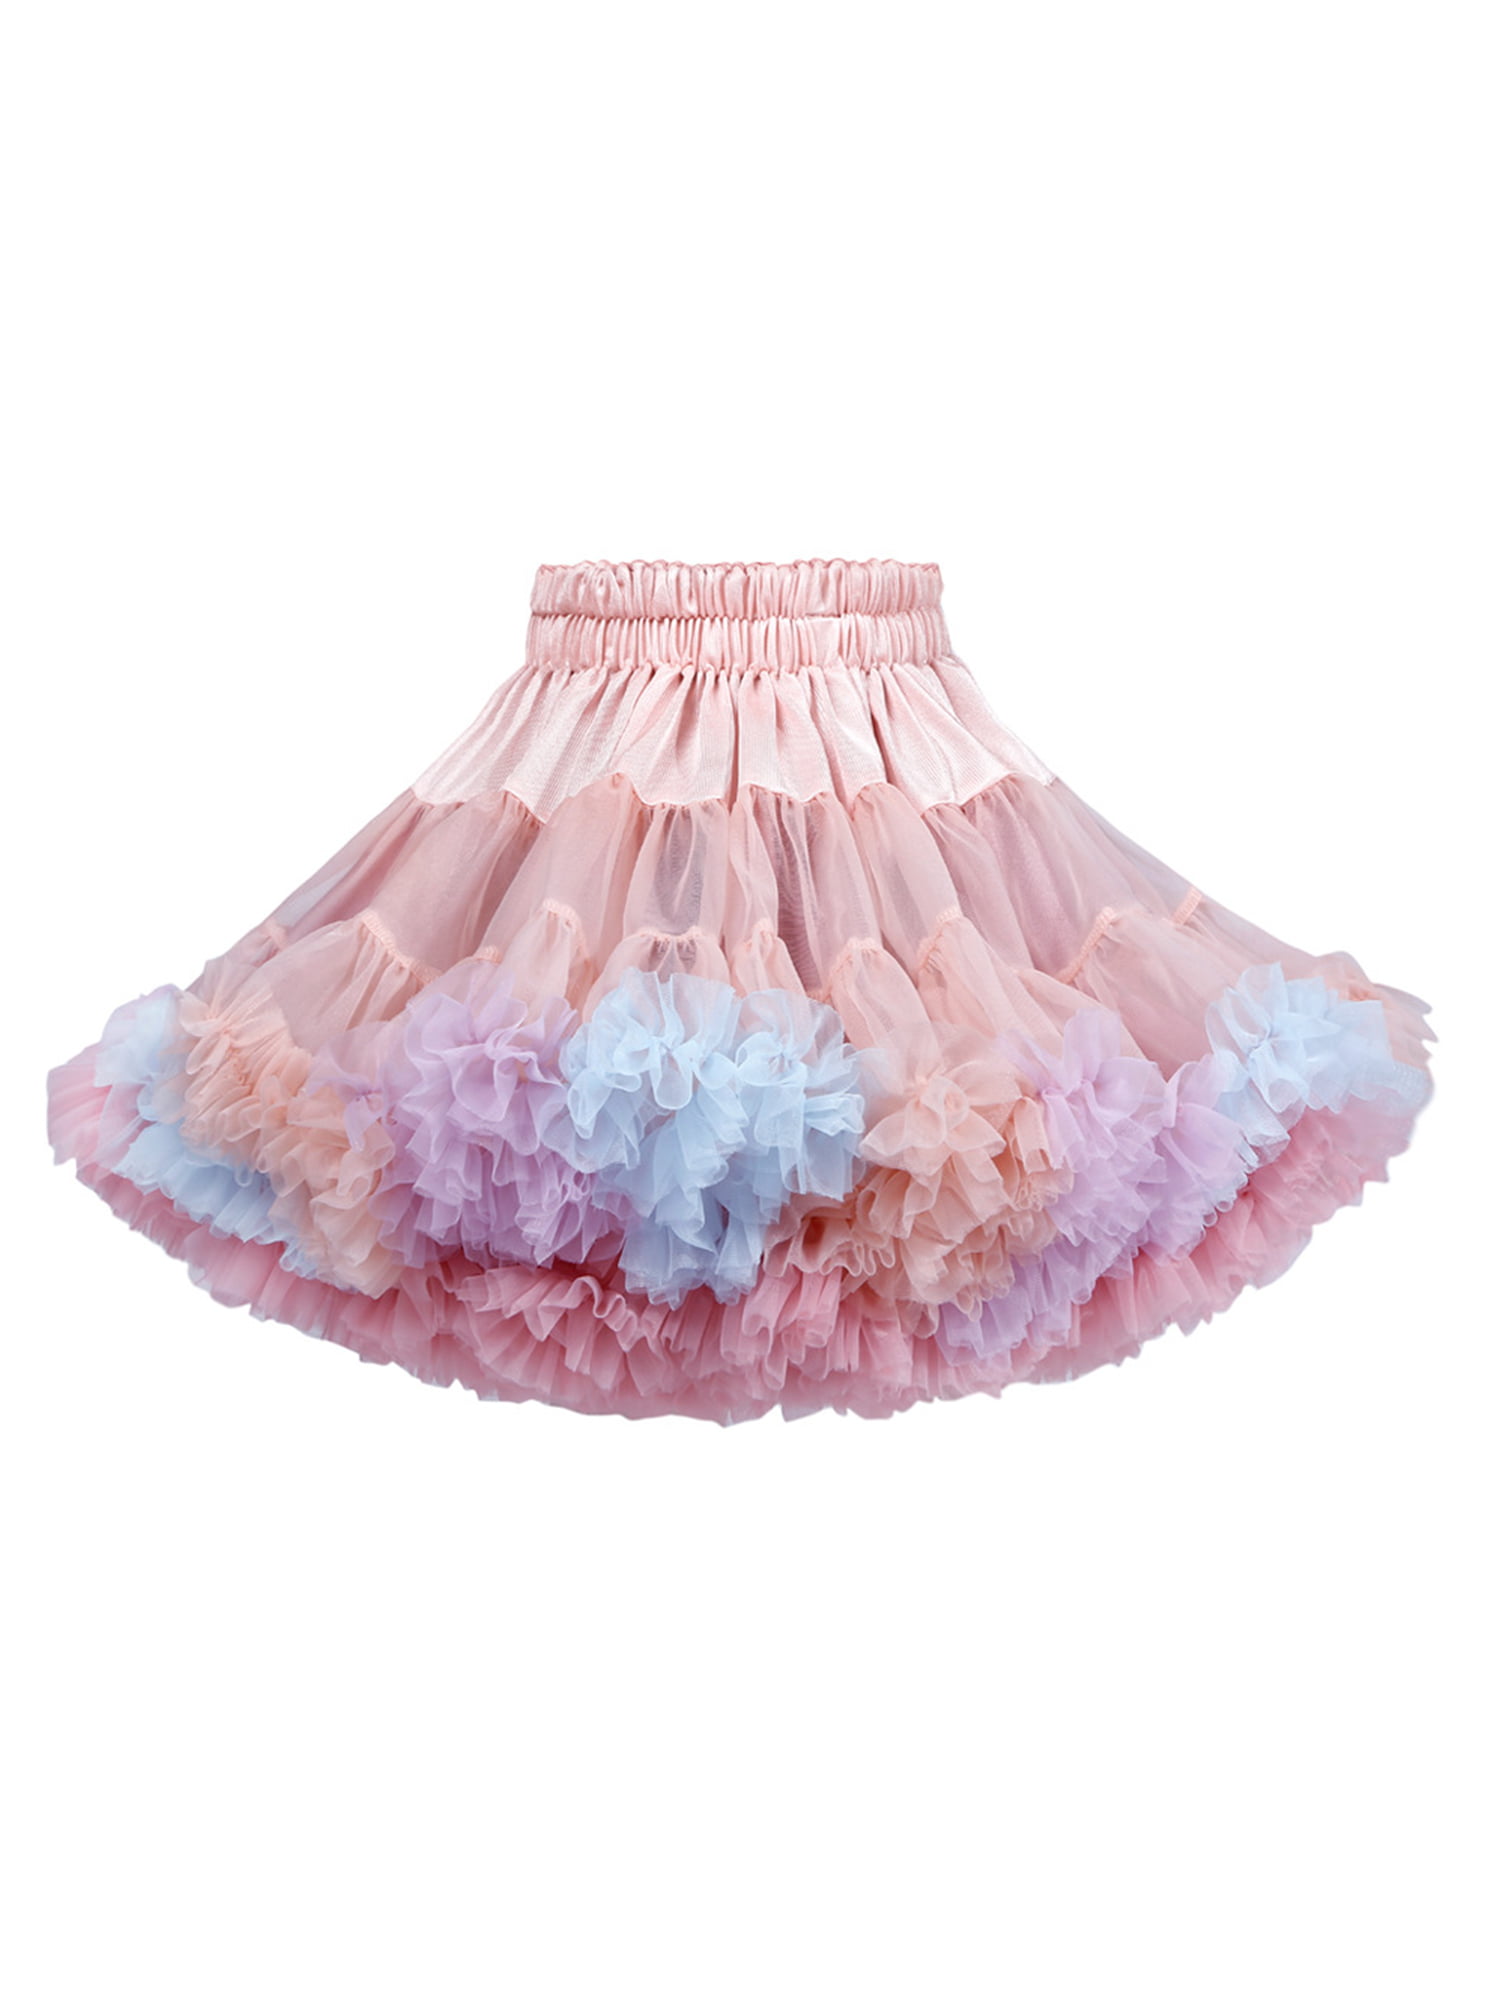 Hot Pink Pettiskirt Skirt Party Dance Tutu Dress Child Girl Clothing 1-8y